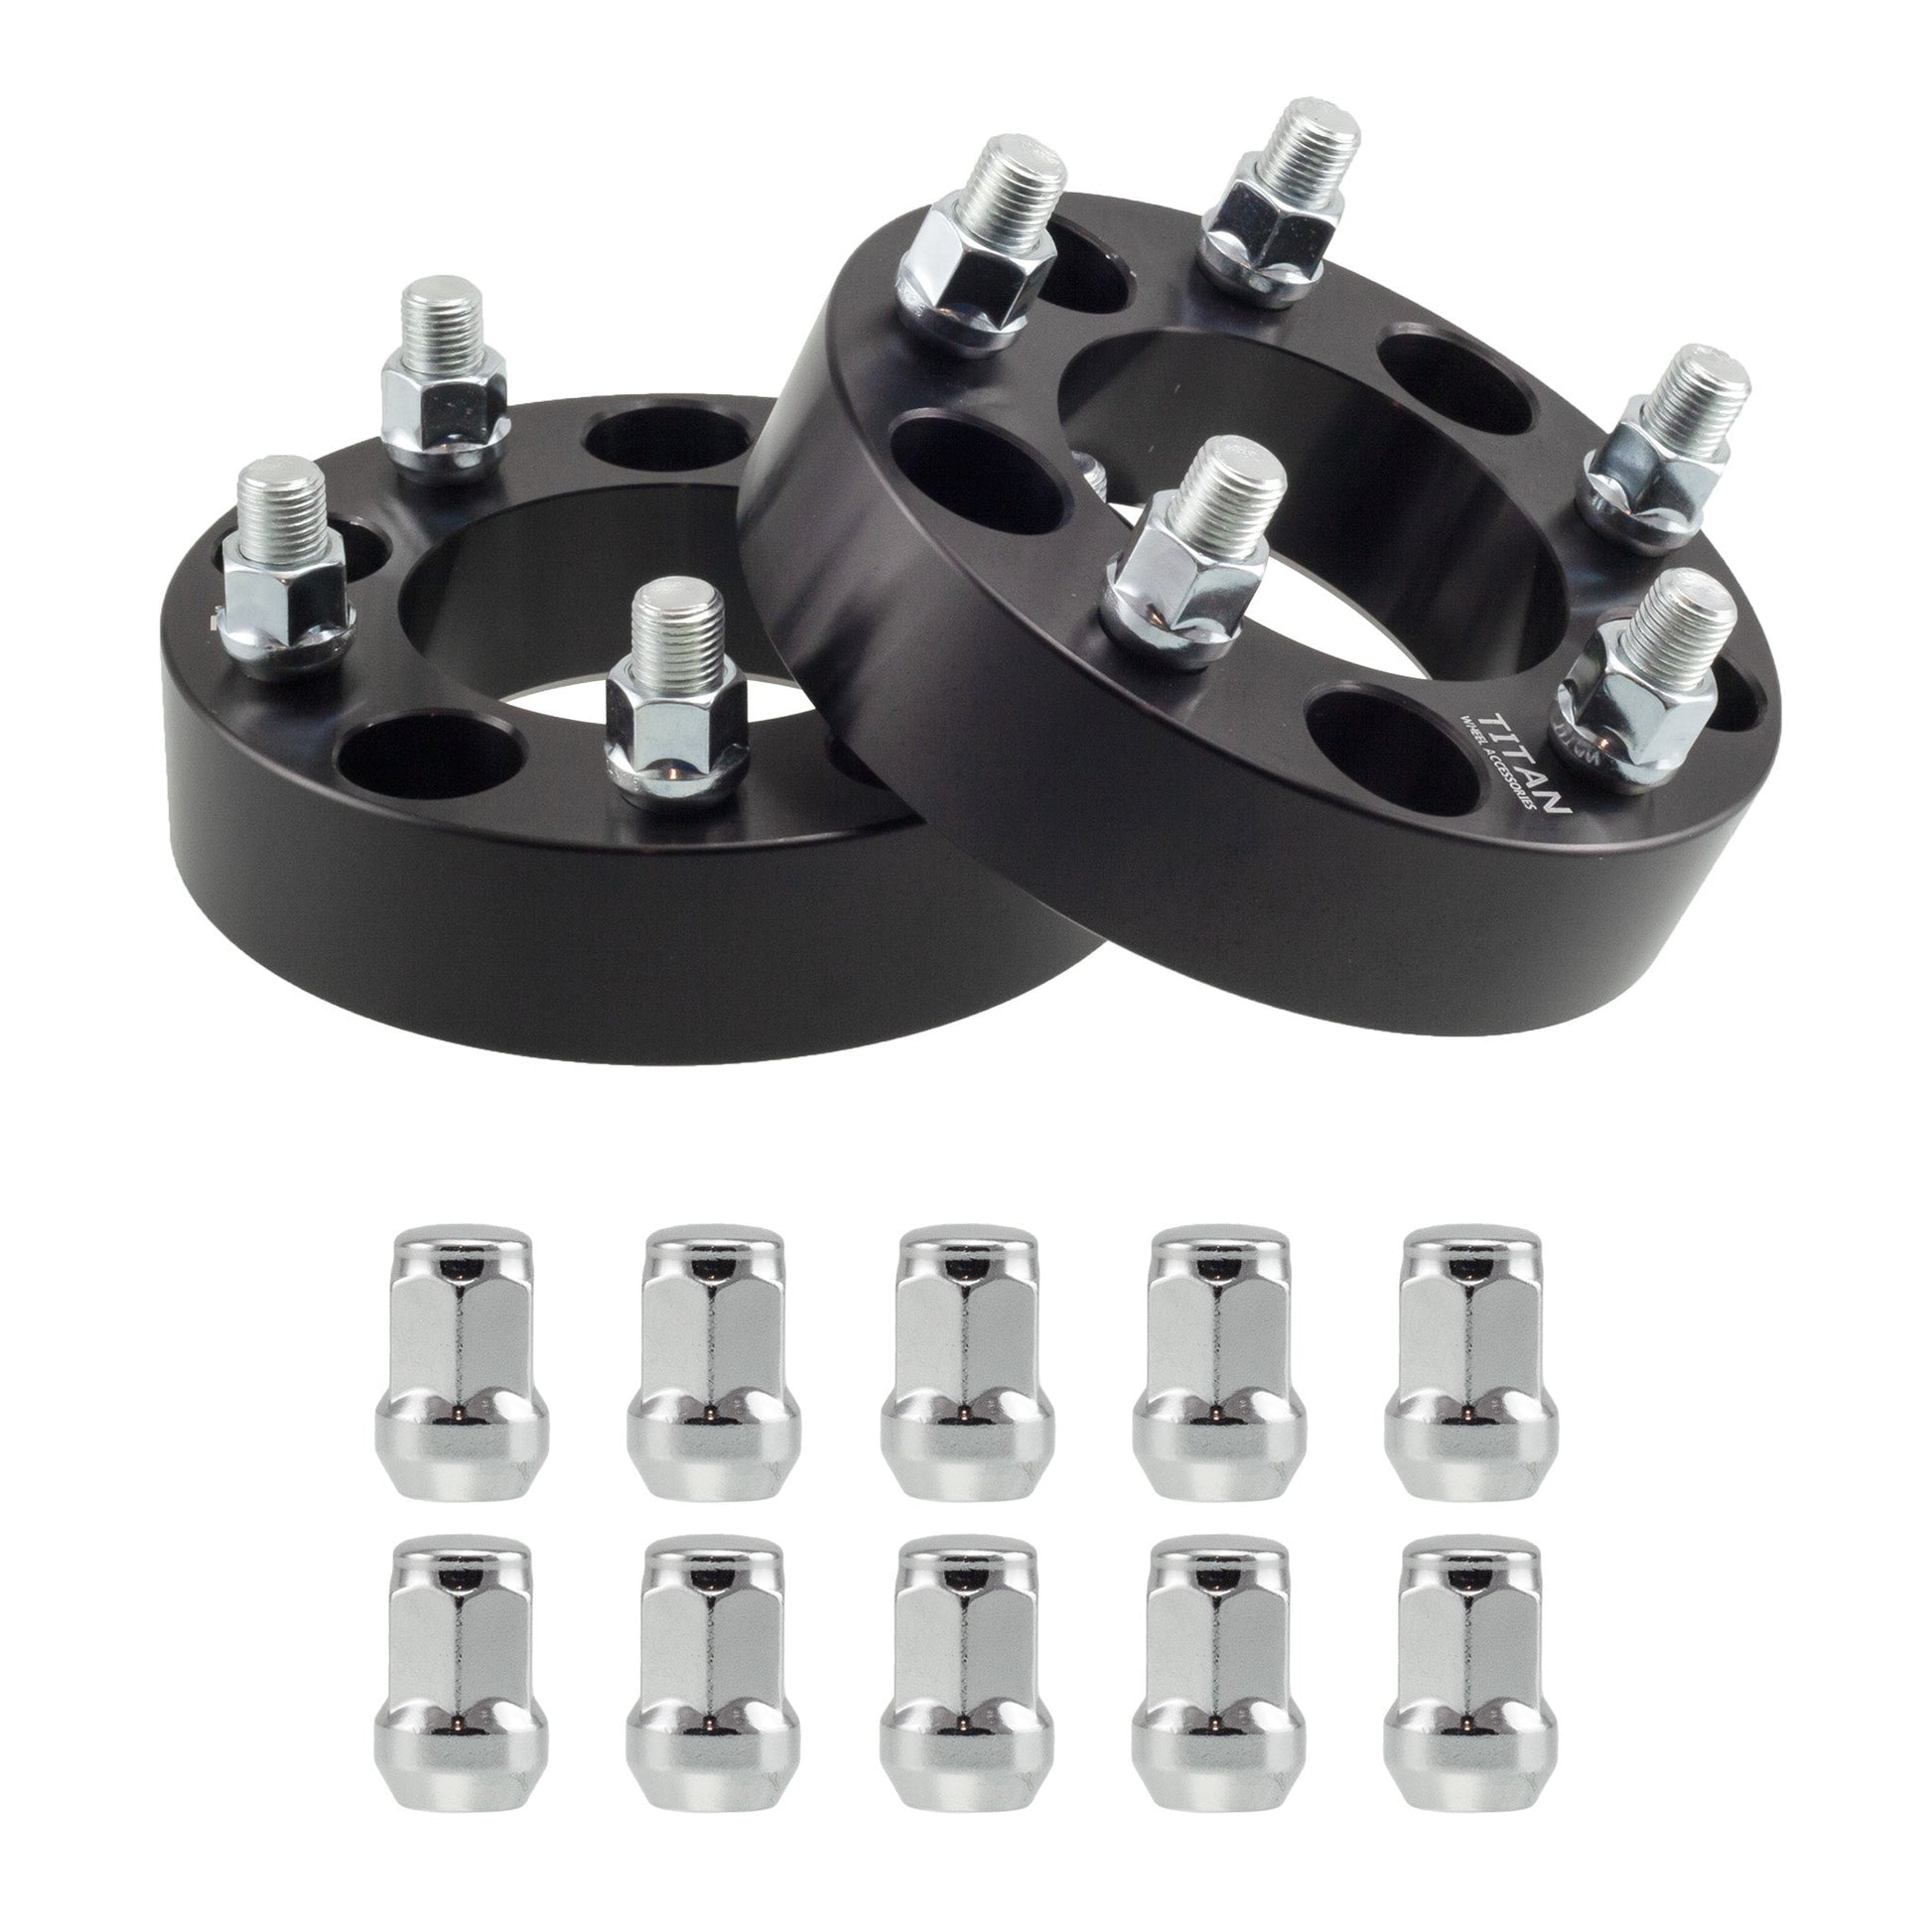 38mm (1.5") Titan Wheel Spacers for Nissan Altima Maxima 350z 370z Infiniti G35 G37 Q50 | 5x114.3 (5x4.5) | 66.1 Hubcentric |12x1.25 Studs | Titan Wheel Accessories